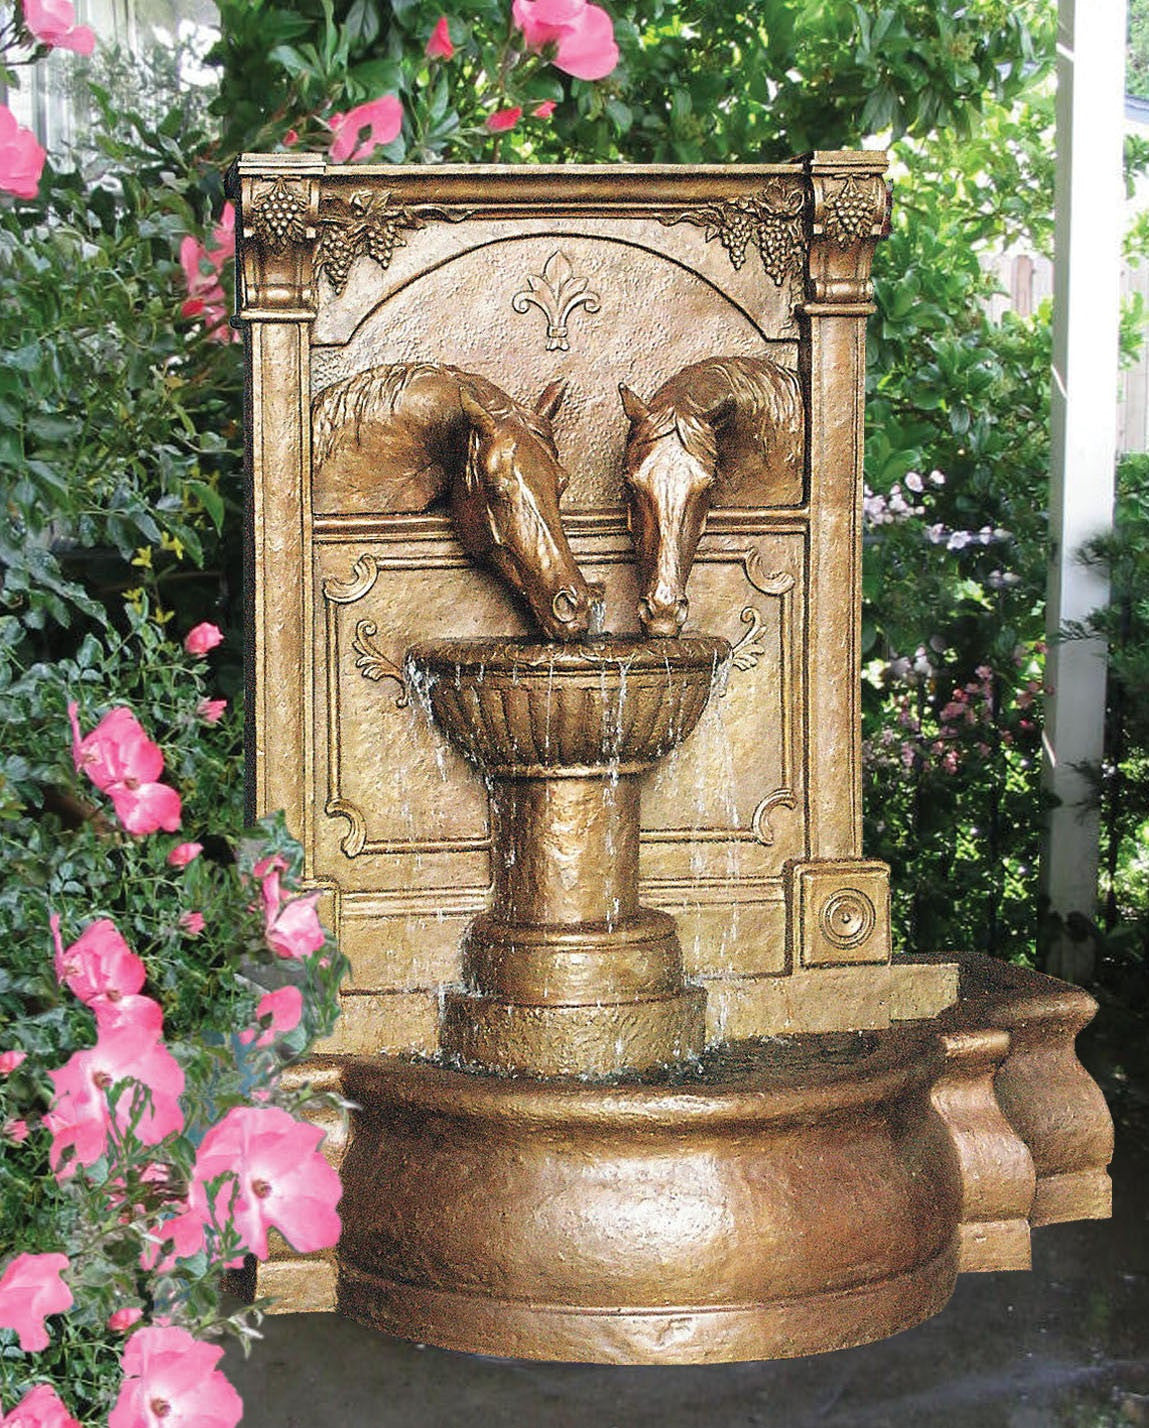 Sharing a Drink equestrian Fountain (Bronze) - Patricia Borum - 1